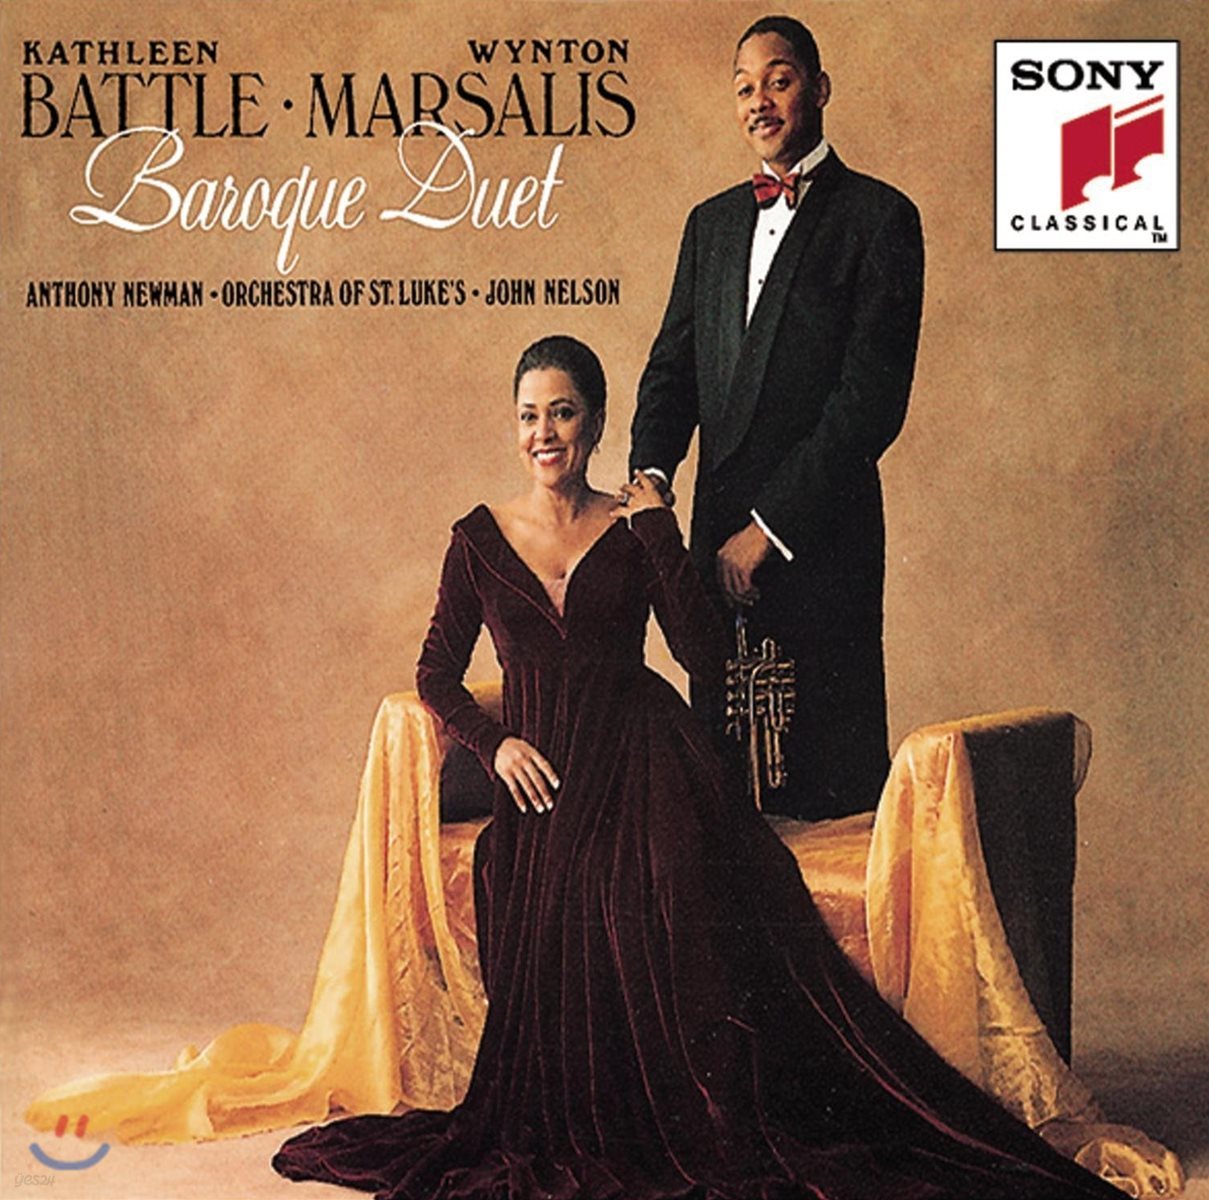 Kathleen Battle / Wynton Marsalis 바로크 듀엣 - 케슬린 배틀 & 윈튼 마샬리스 (Baroque Duet)